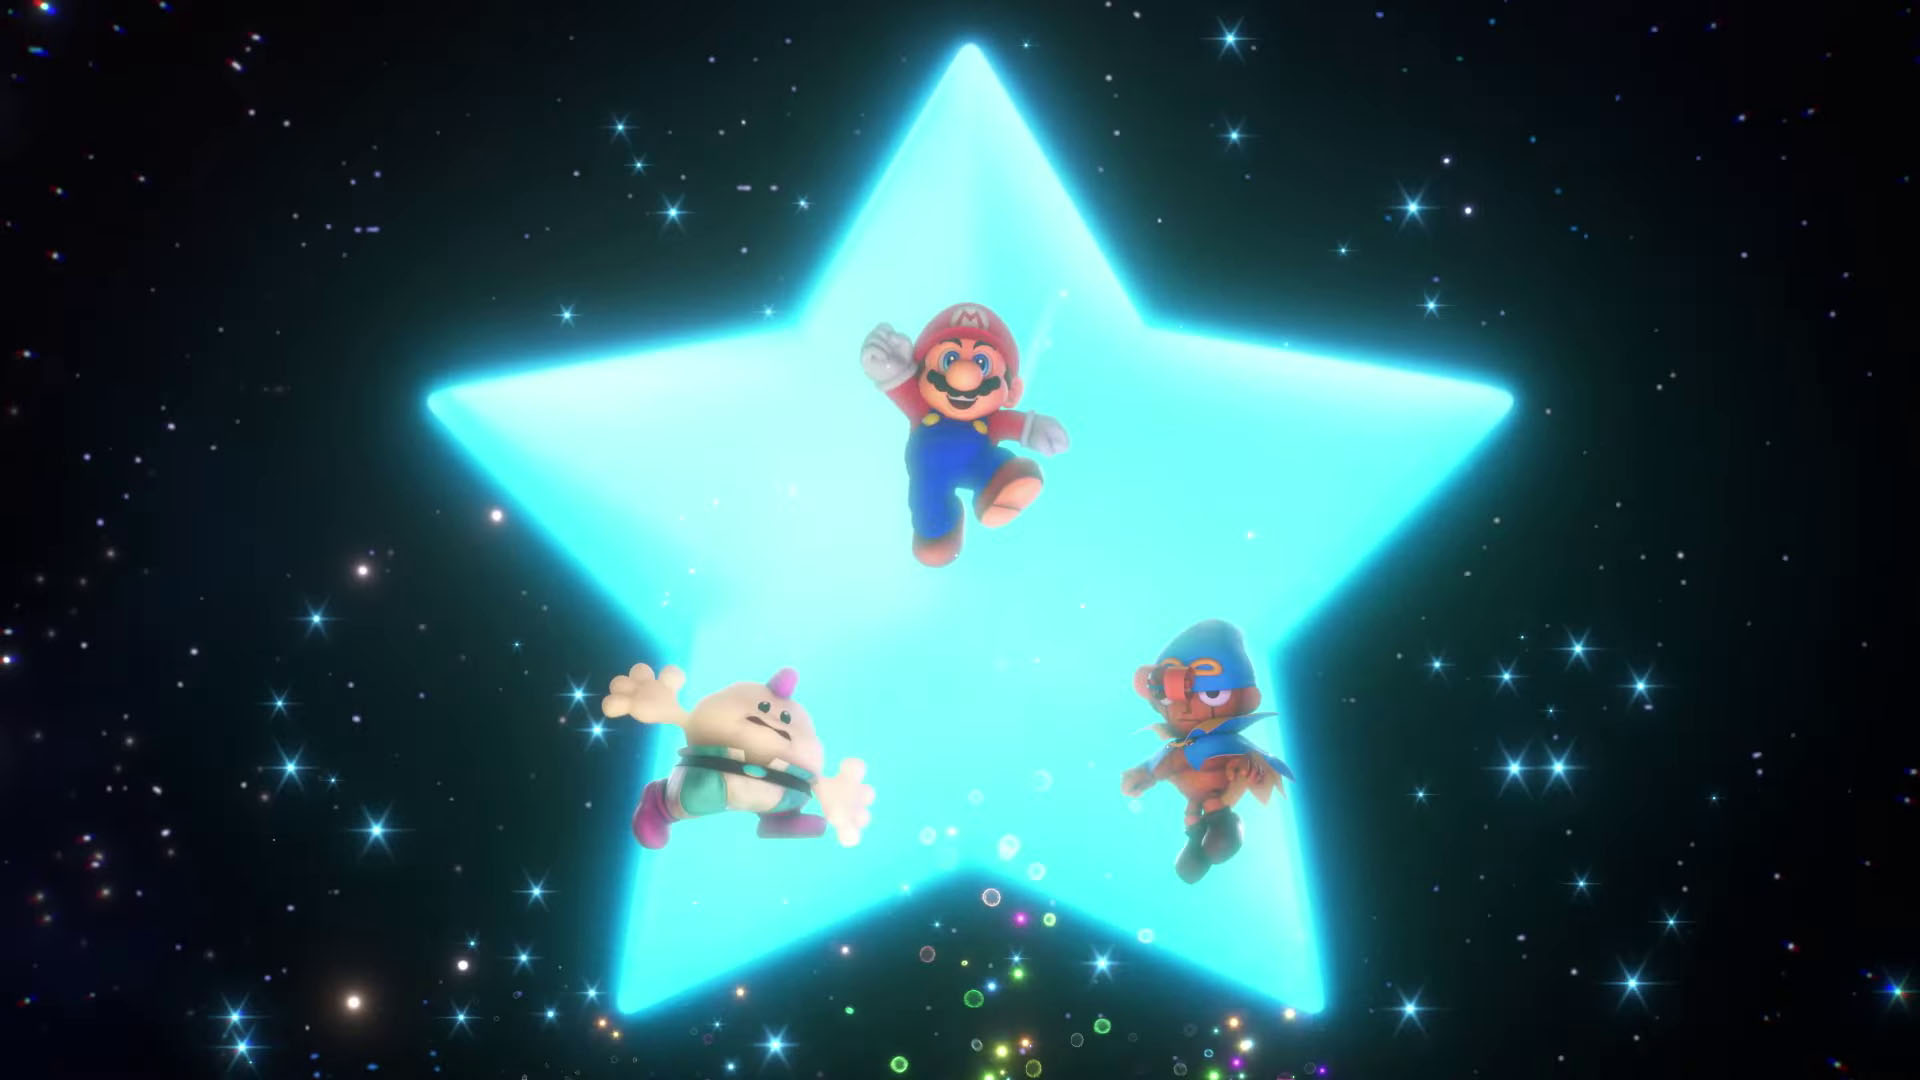 Super Mario RPG – Overview Trailer – Nintendo Switch 